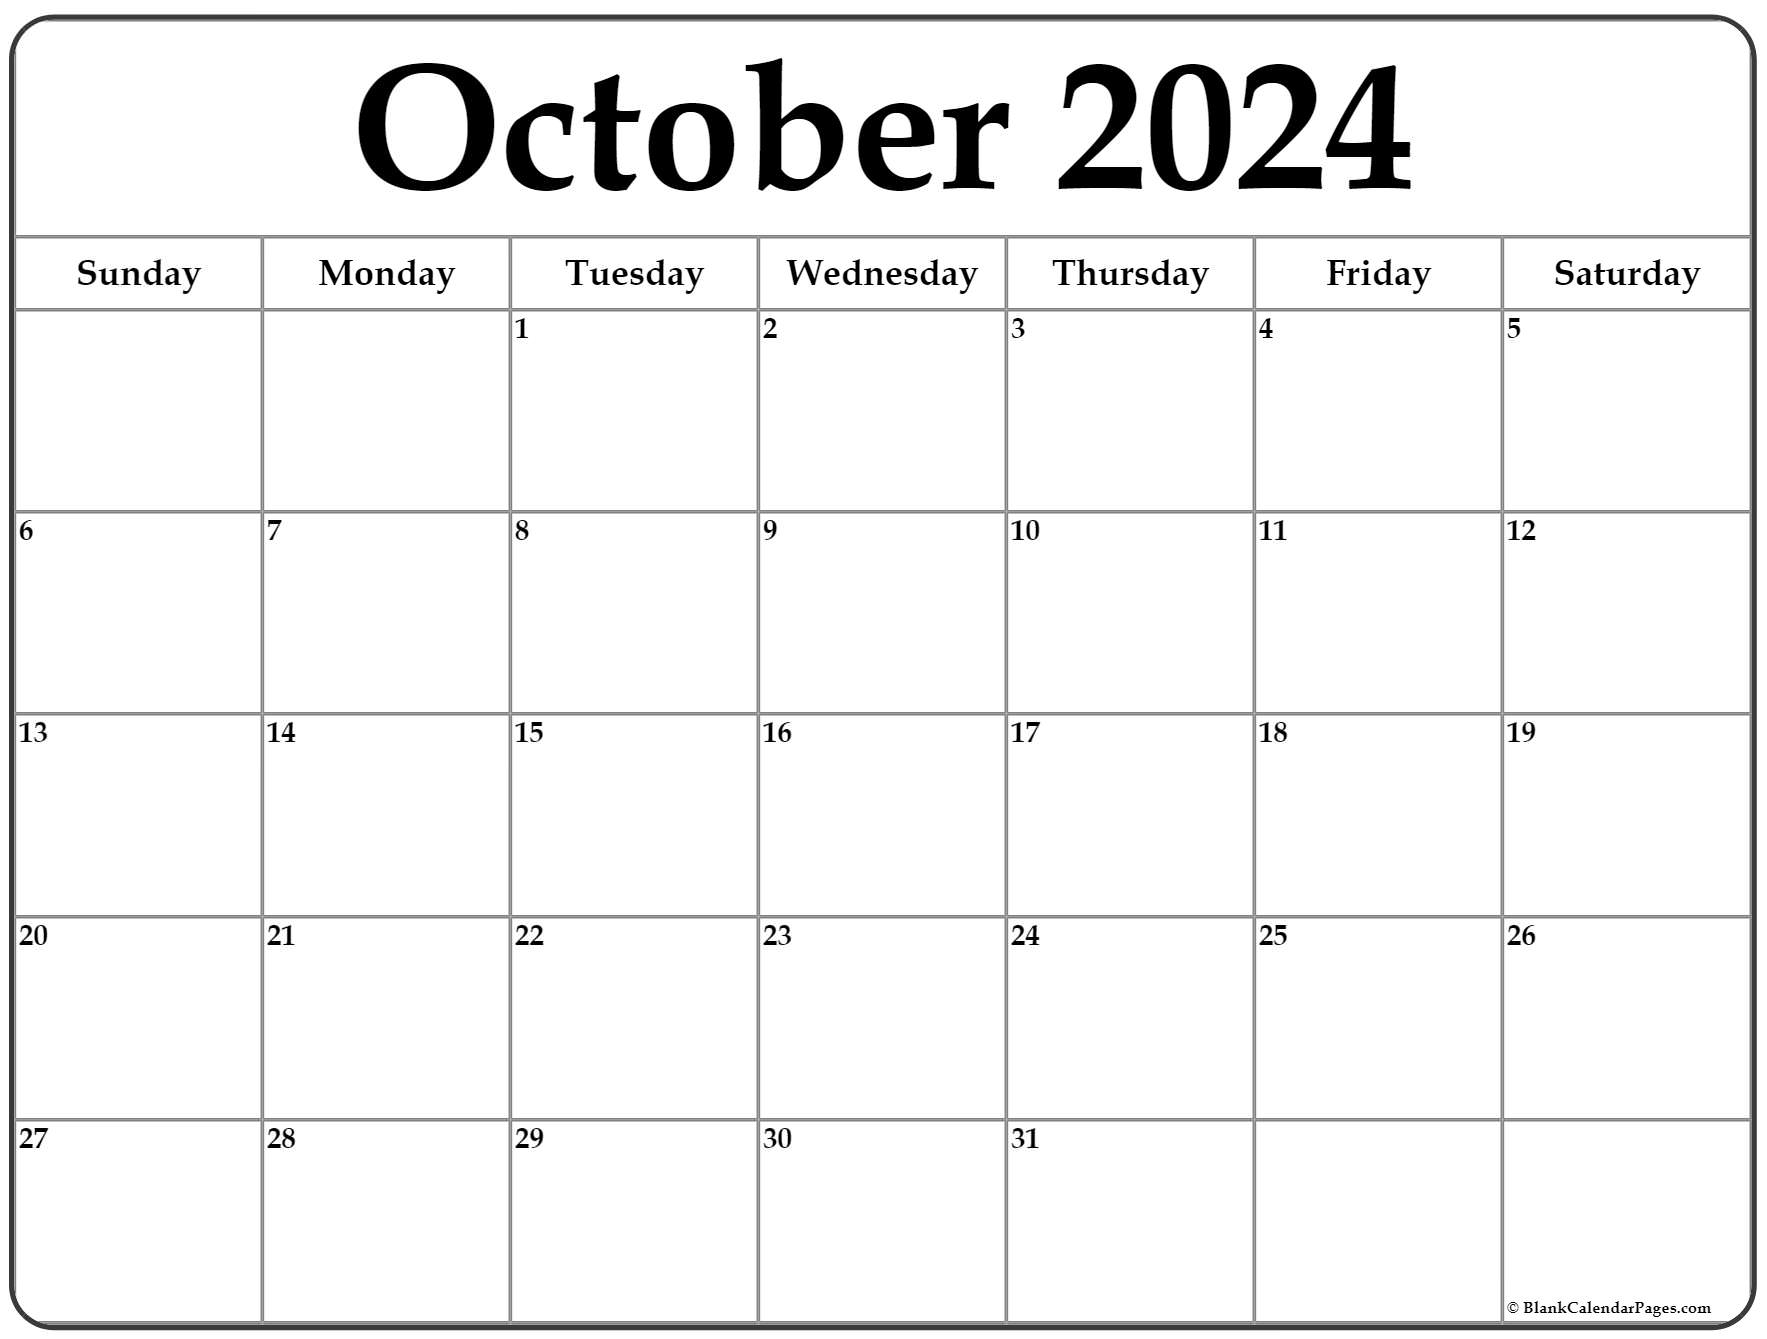 Monthly Calendar October 2022 October 2022 Calendar | Free Printable Calendar Templates